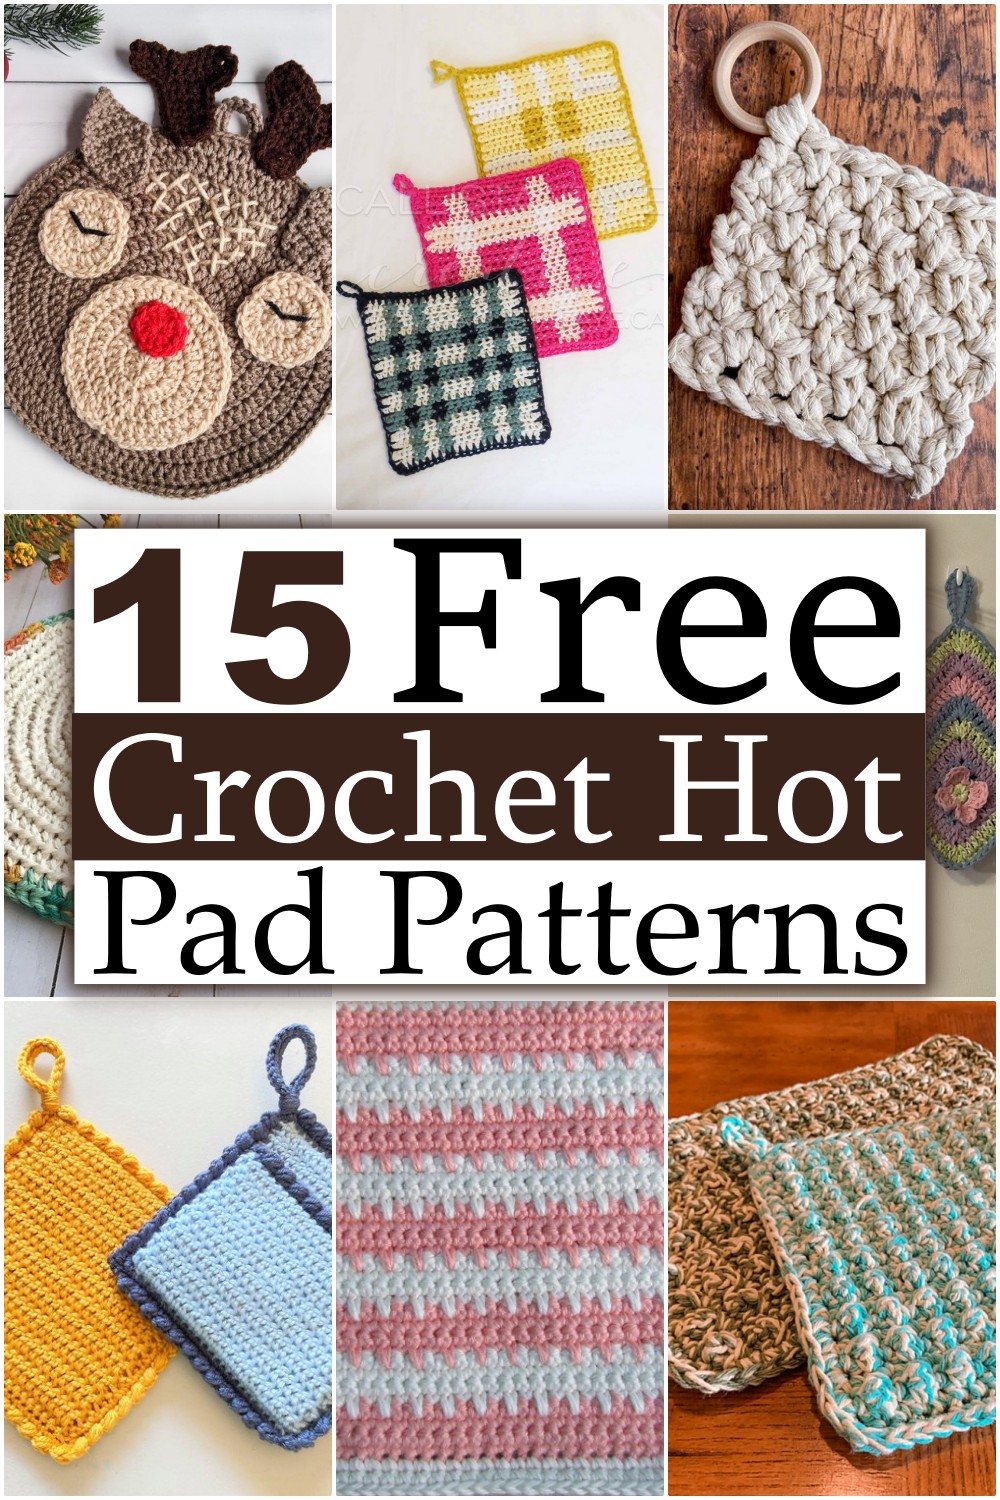 Crochet Hot Pad Patterns